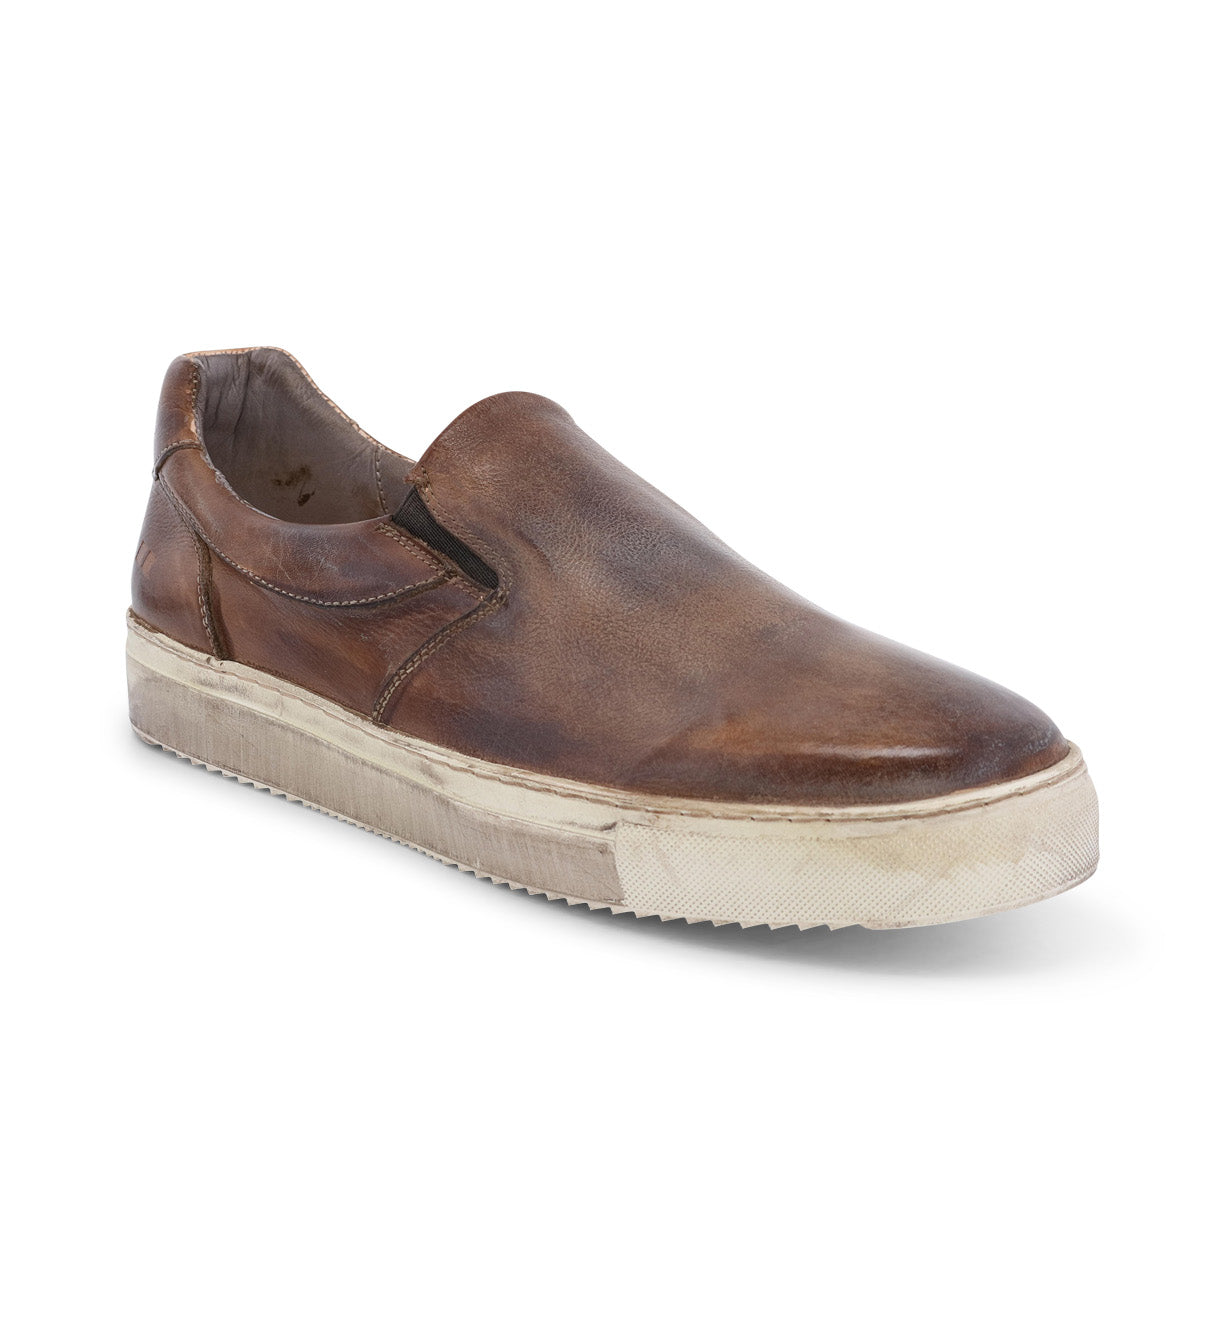 A men's brown leather slip-on sneaker, Harry by Bed Stu.